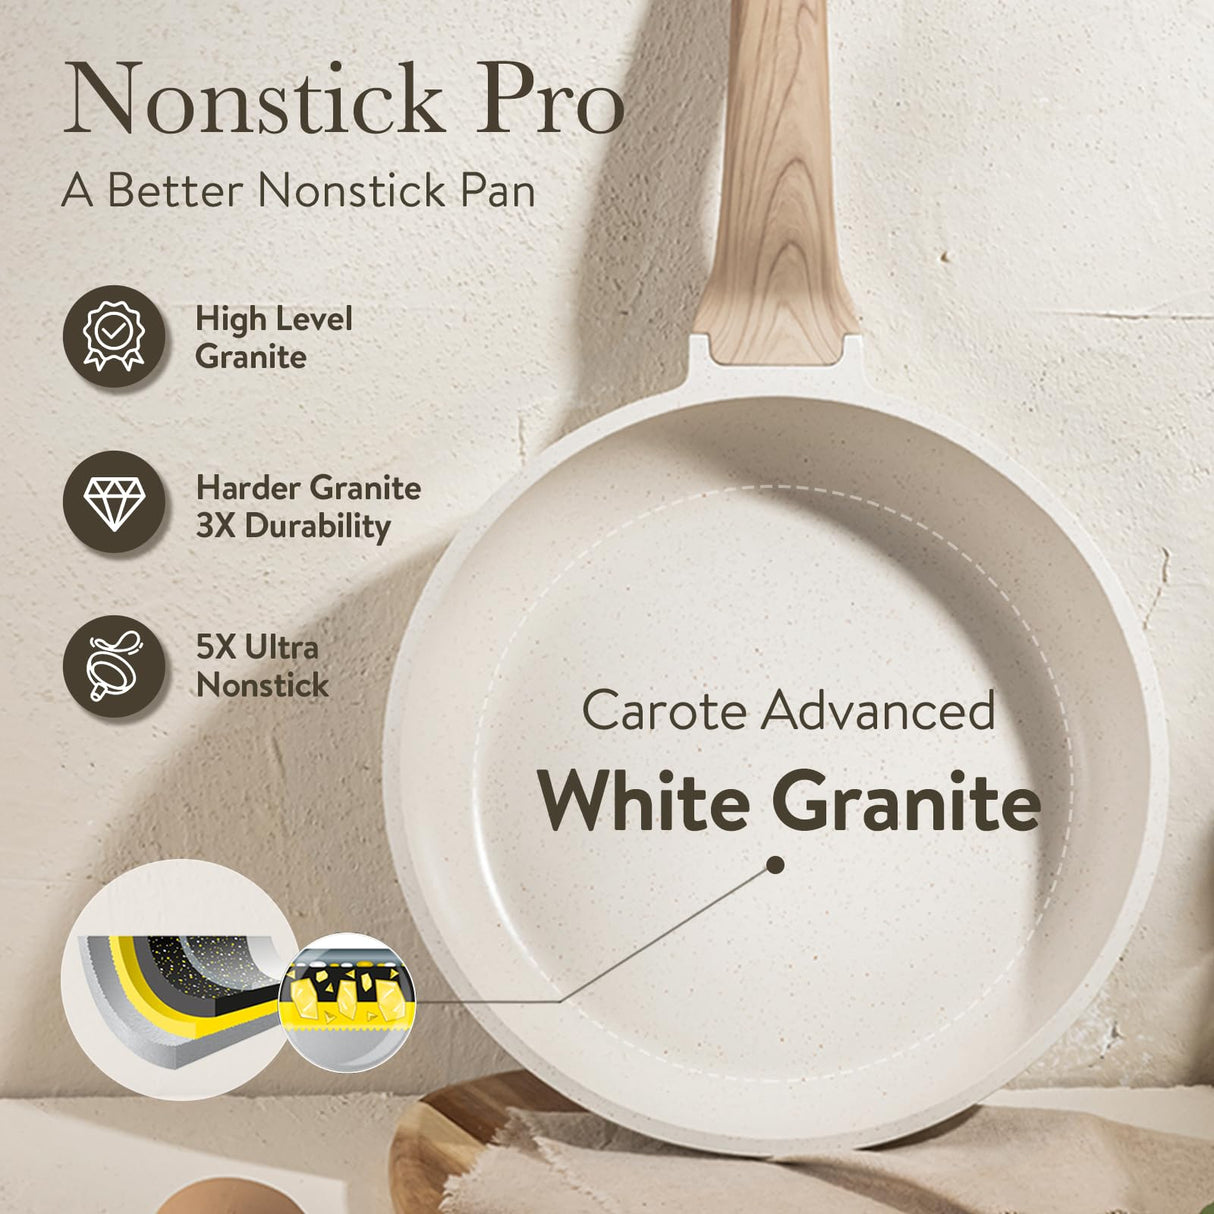 CAROTE Pots and Pans Set Nonstick, White Granite Induction Kitchen Cookware Set, 10 Pcs Non Stick Cooking Set w/Frying Pans & Saucepans(PFOS, PFOA Free)